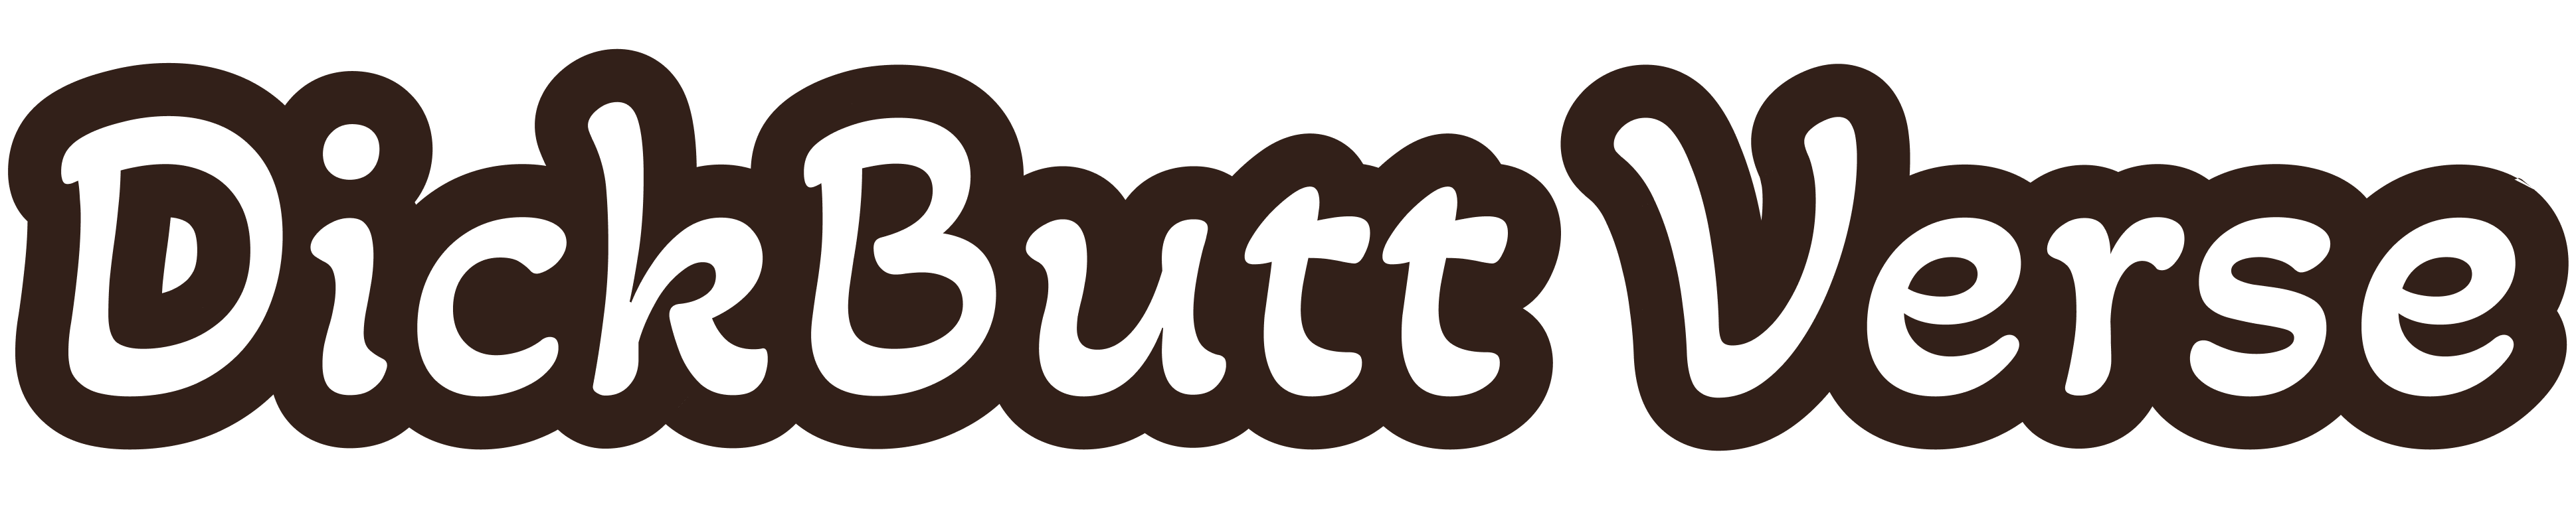 DickButtVerse logo